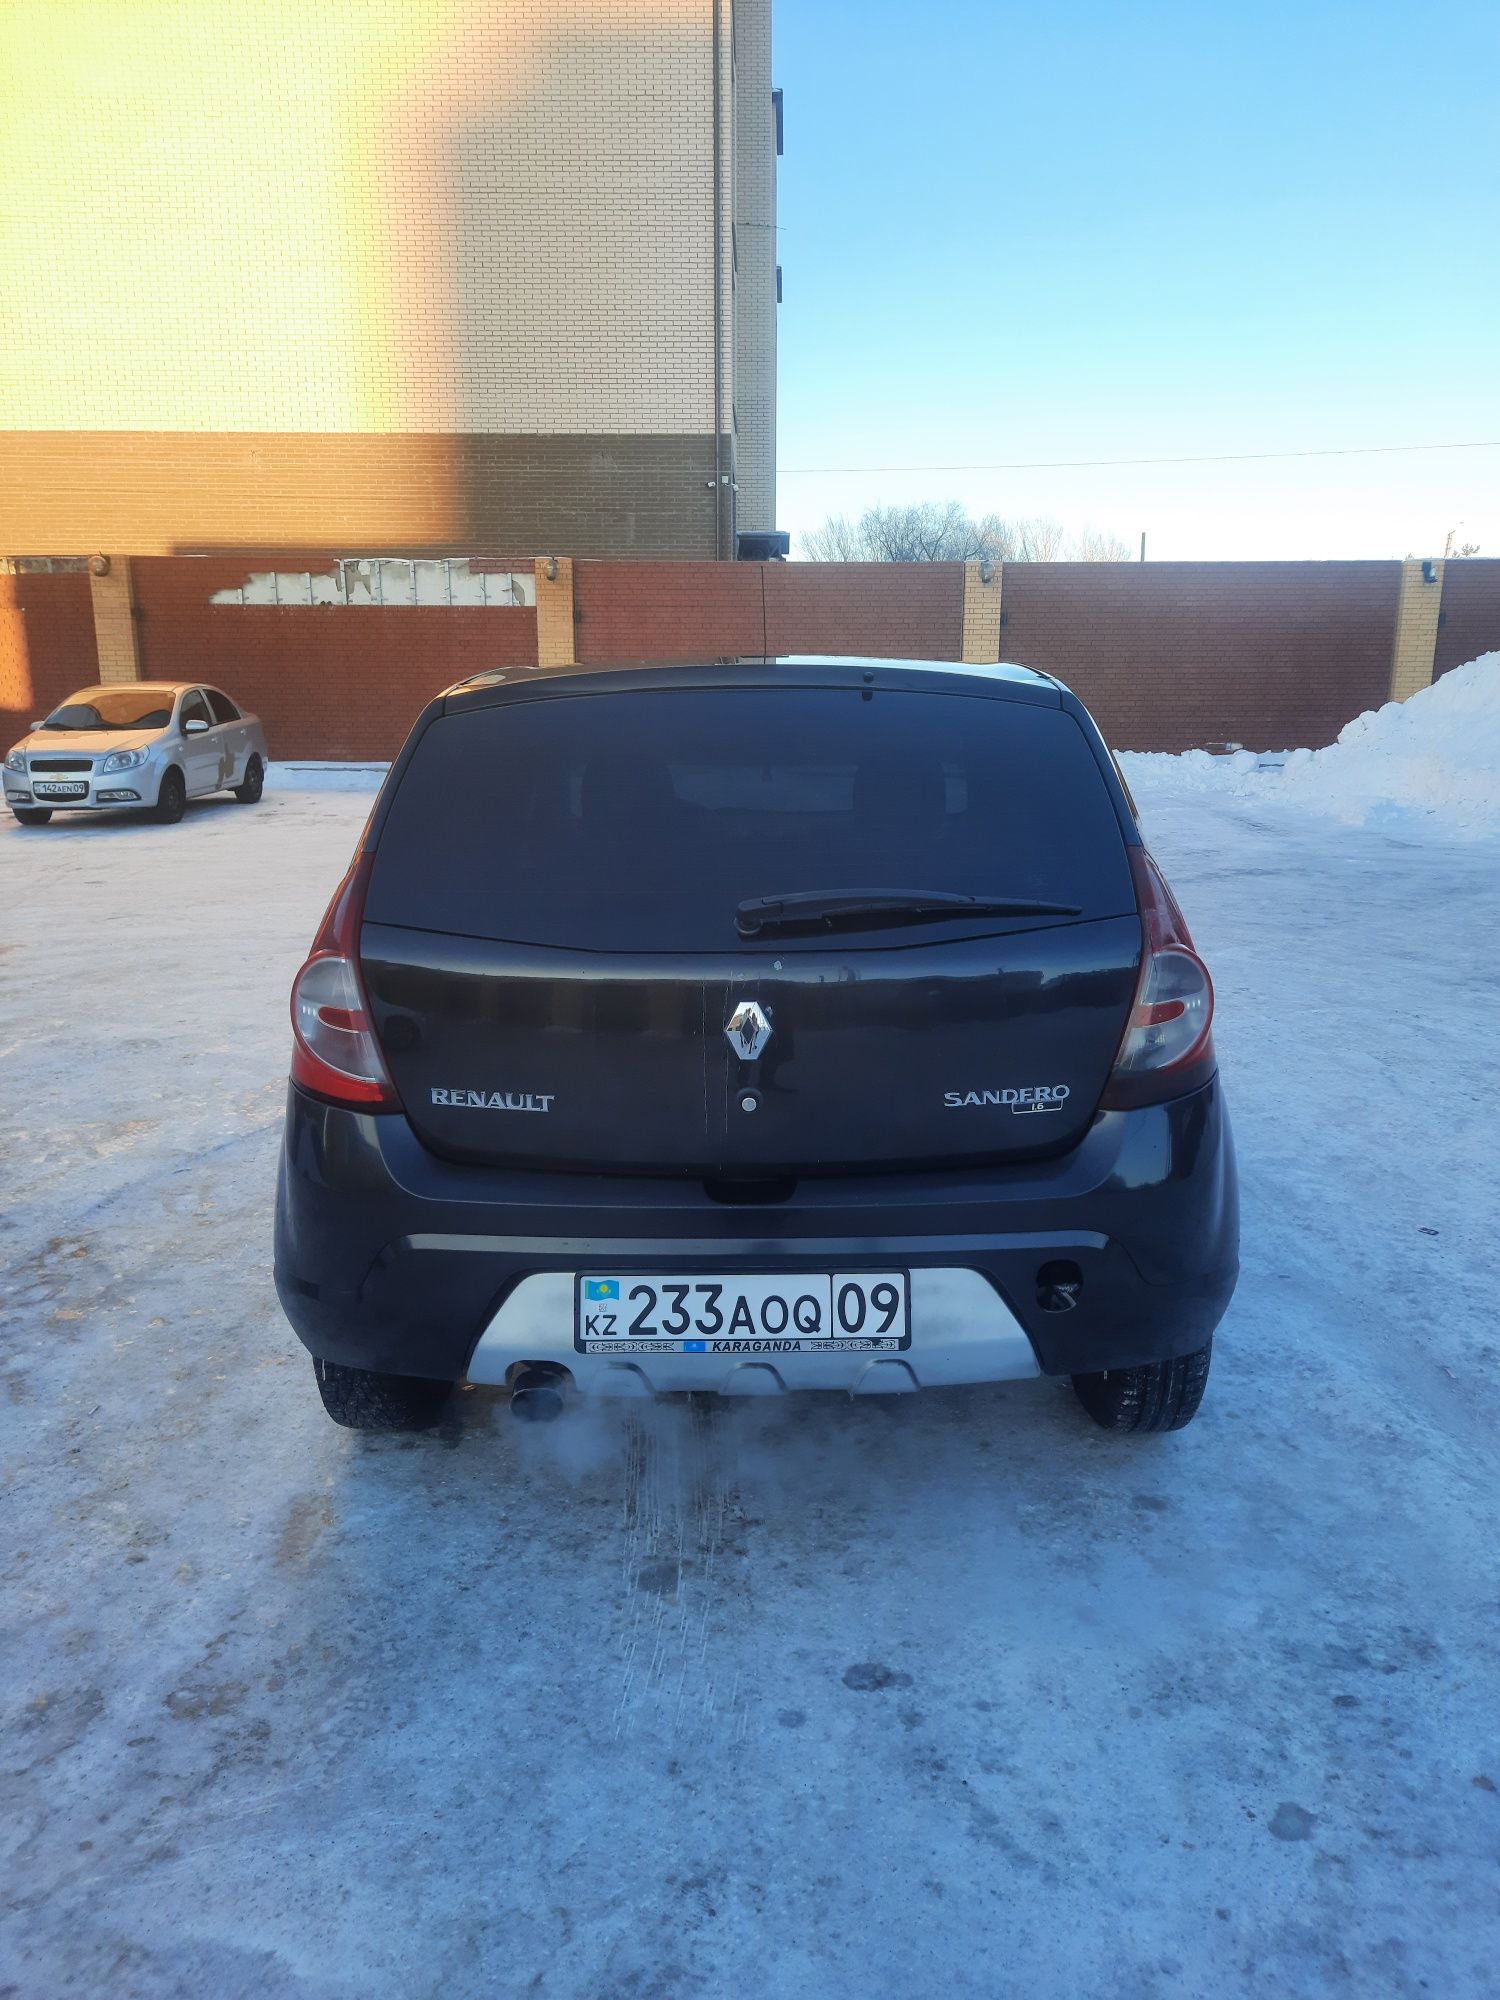 Renault sandero 1.6 в продаже